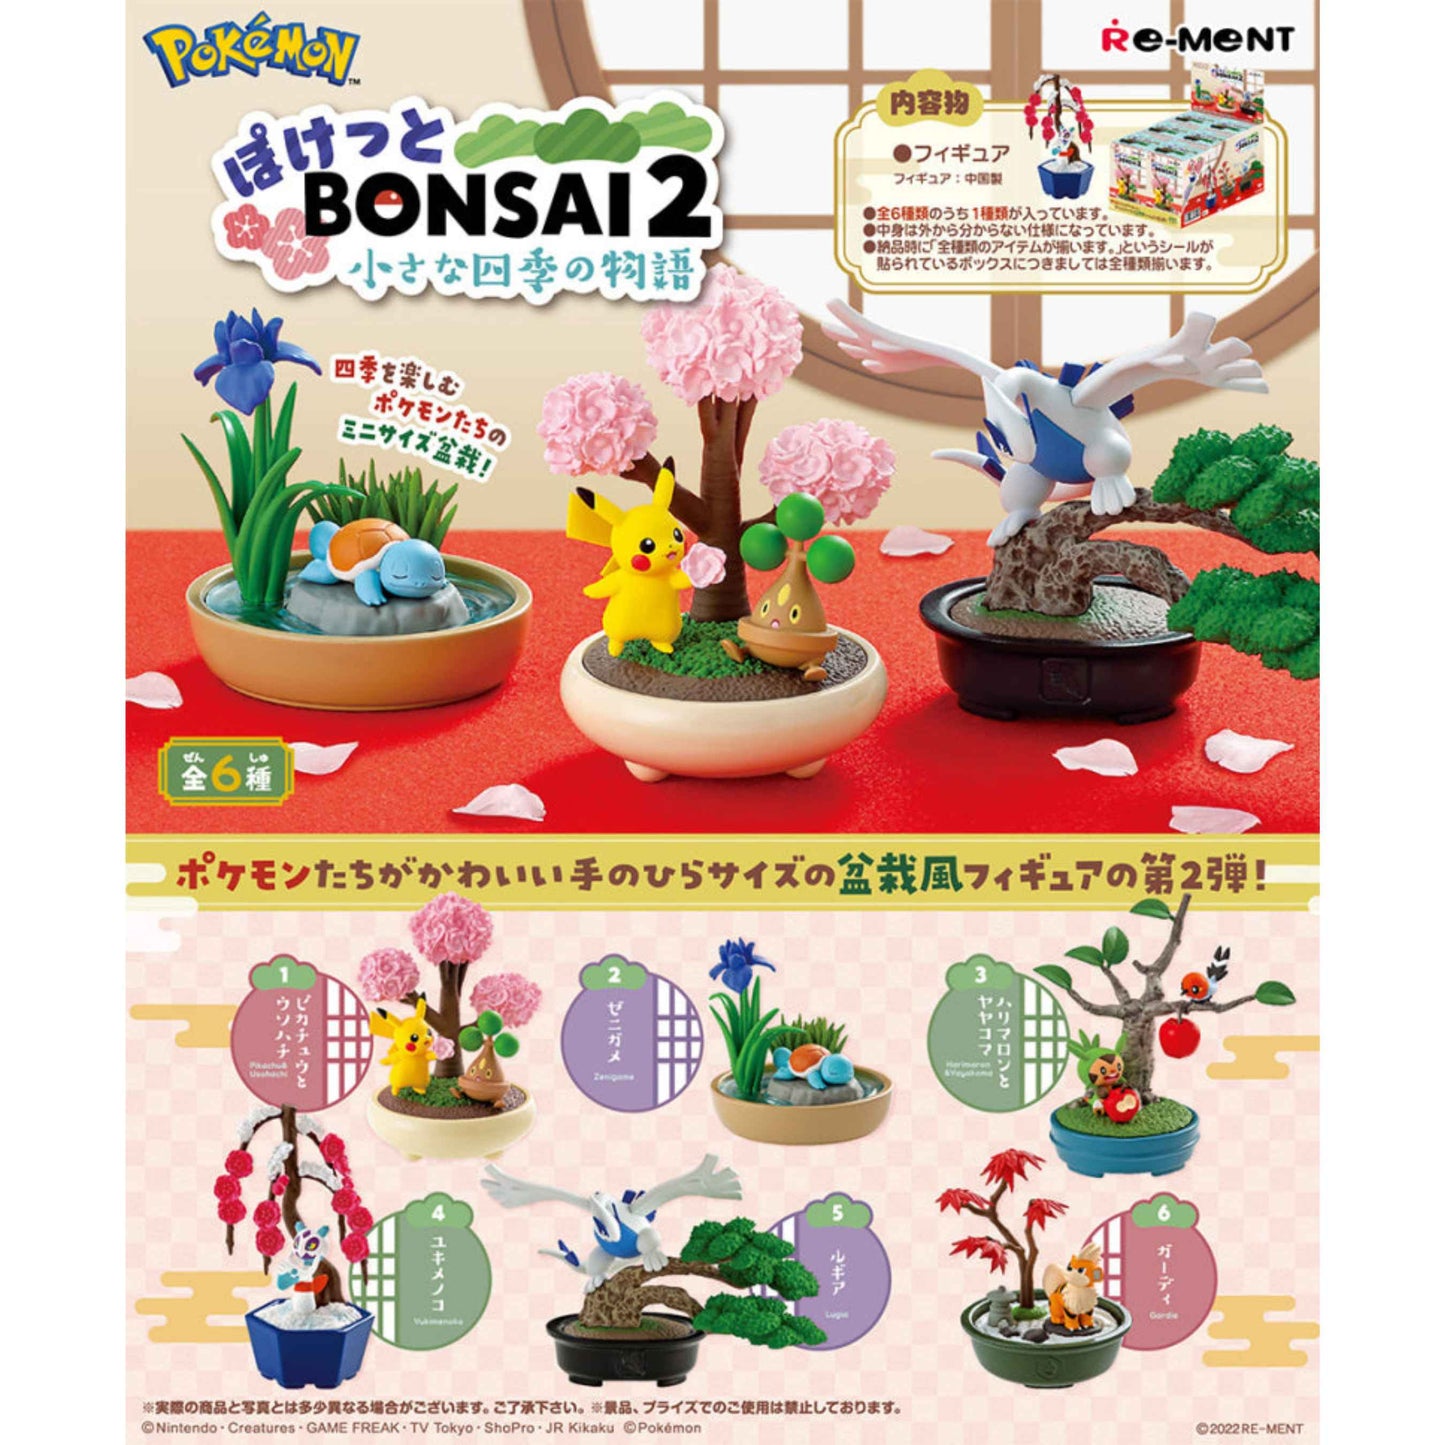 Re-Ment: Pokémon Bonsai 2 Series Blind Box - Whole Set of 6